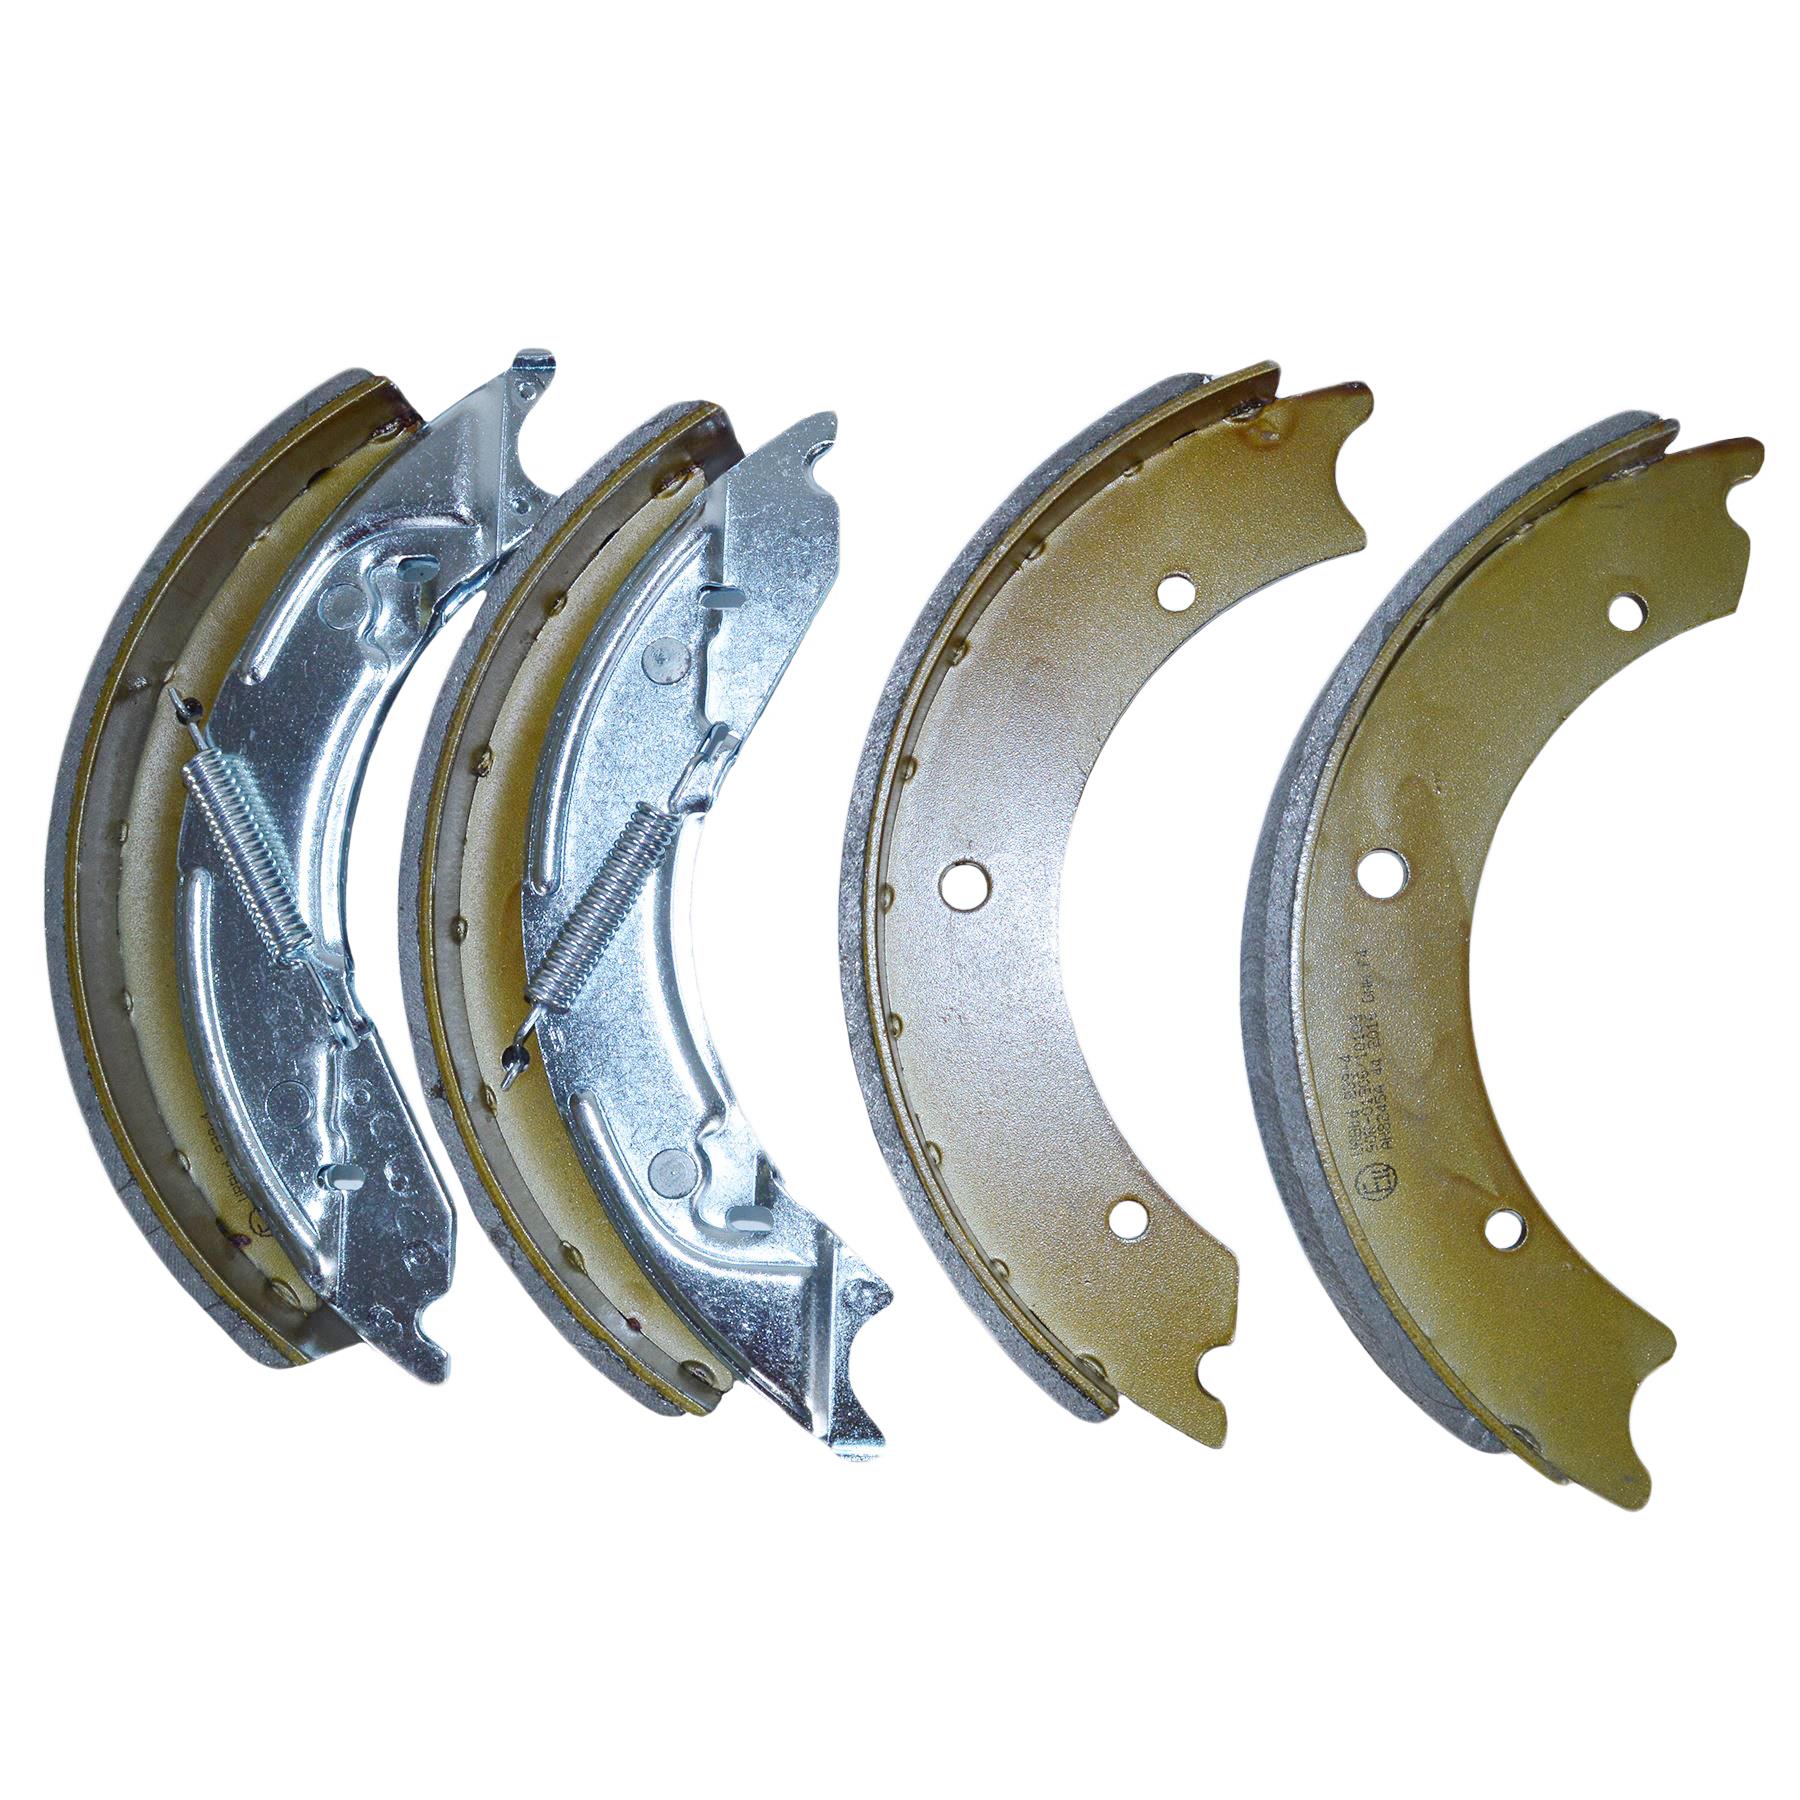 Trailer Brake Shoe Replacements & Spring Kit for KNOTT brake systems